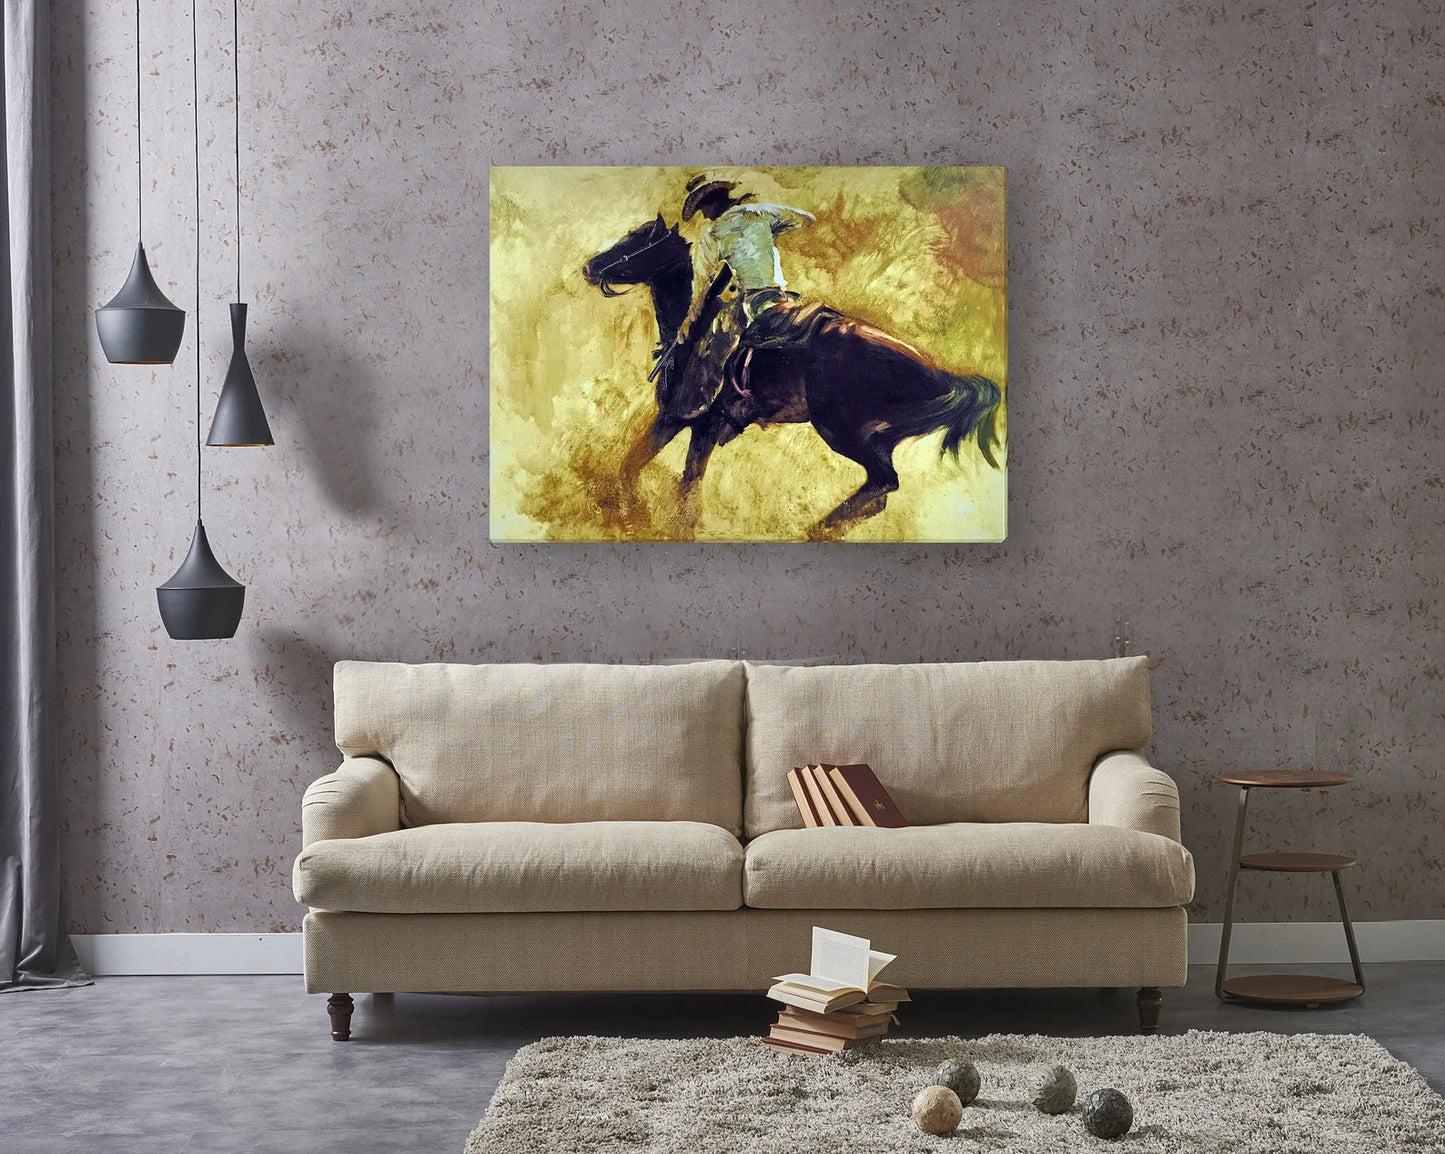 Original "A Cowboy on Horseback" hand painted artwork， living room, bedroom, foyer, bar or office - Framed canvas painting